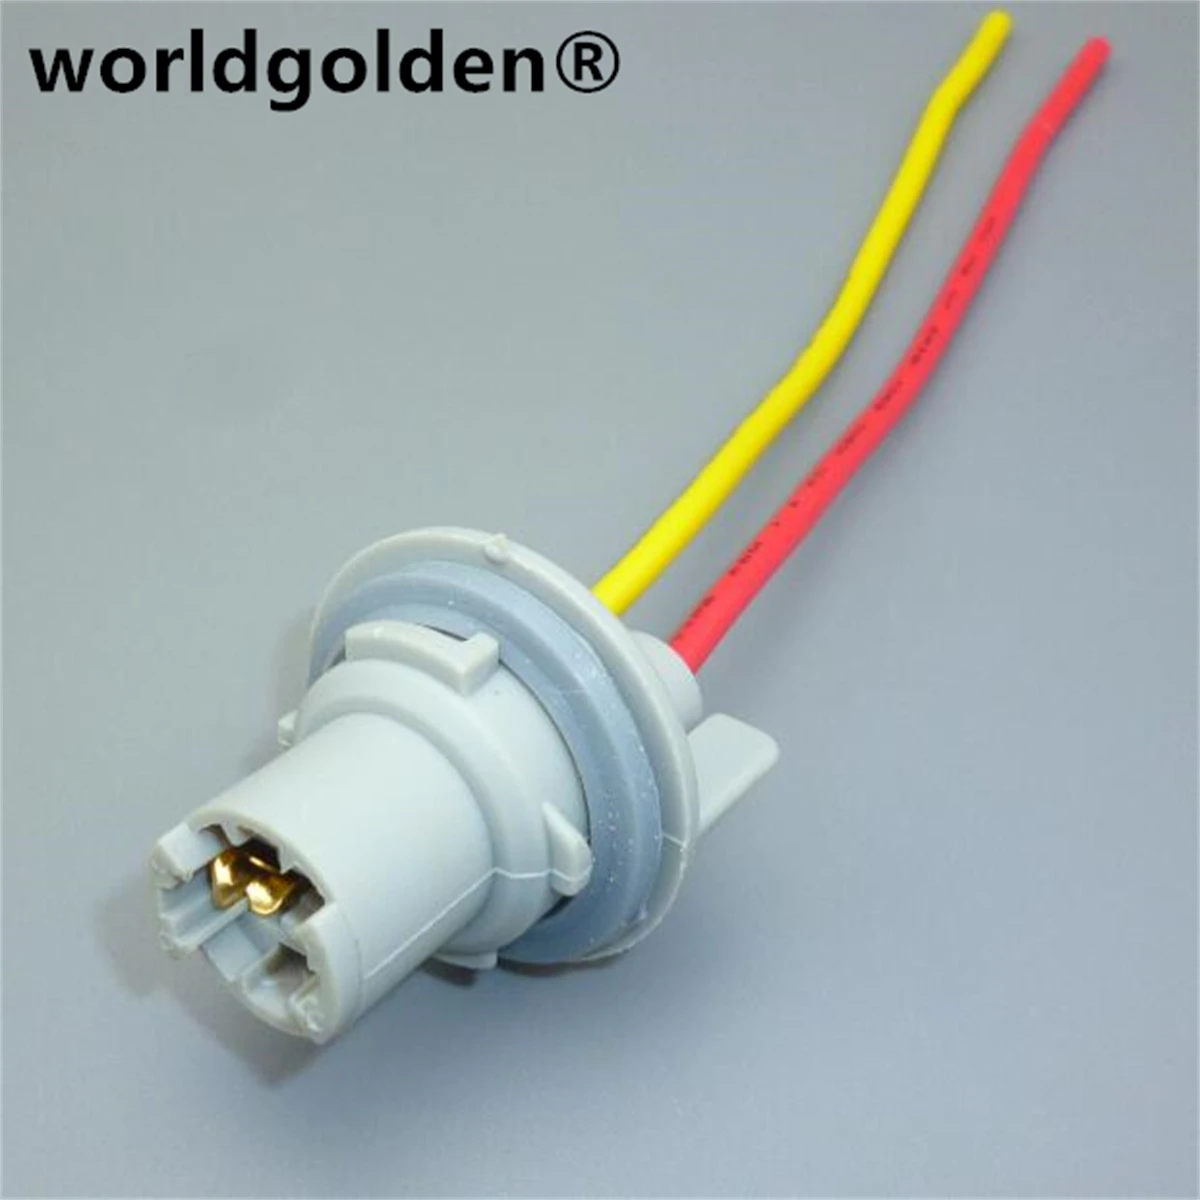 worldgolden 1PCS T10 W5W T15 Auto LED light bulb plug wedge hard adaptor socket connector t10 car lamp holder adapters base